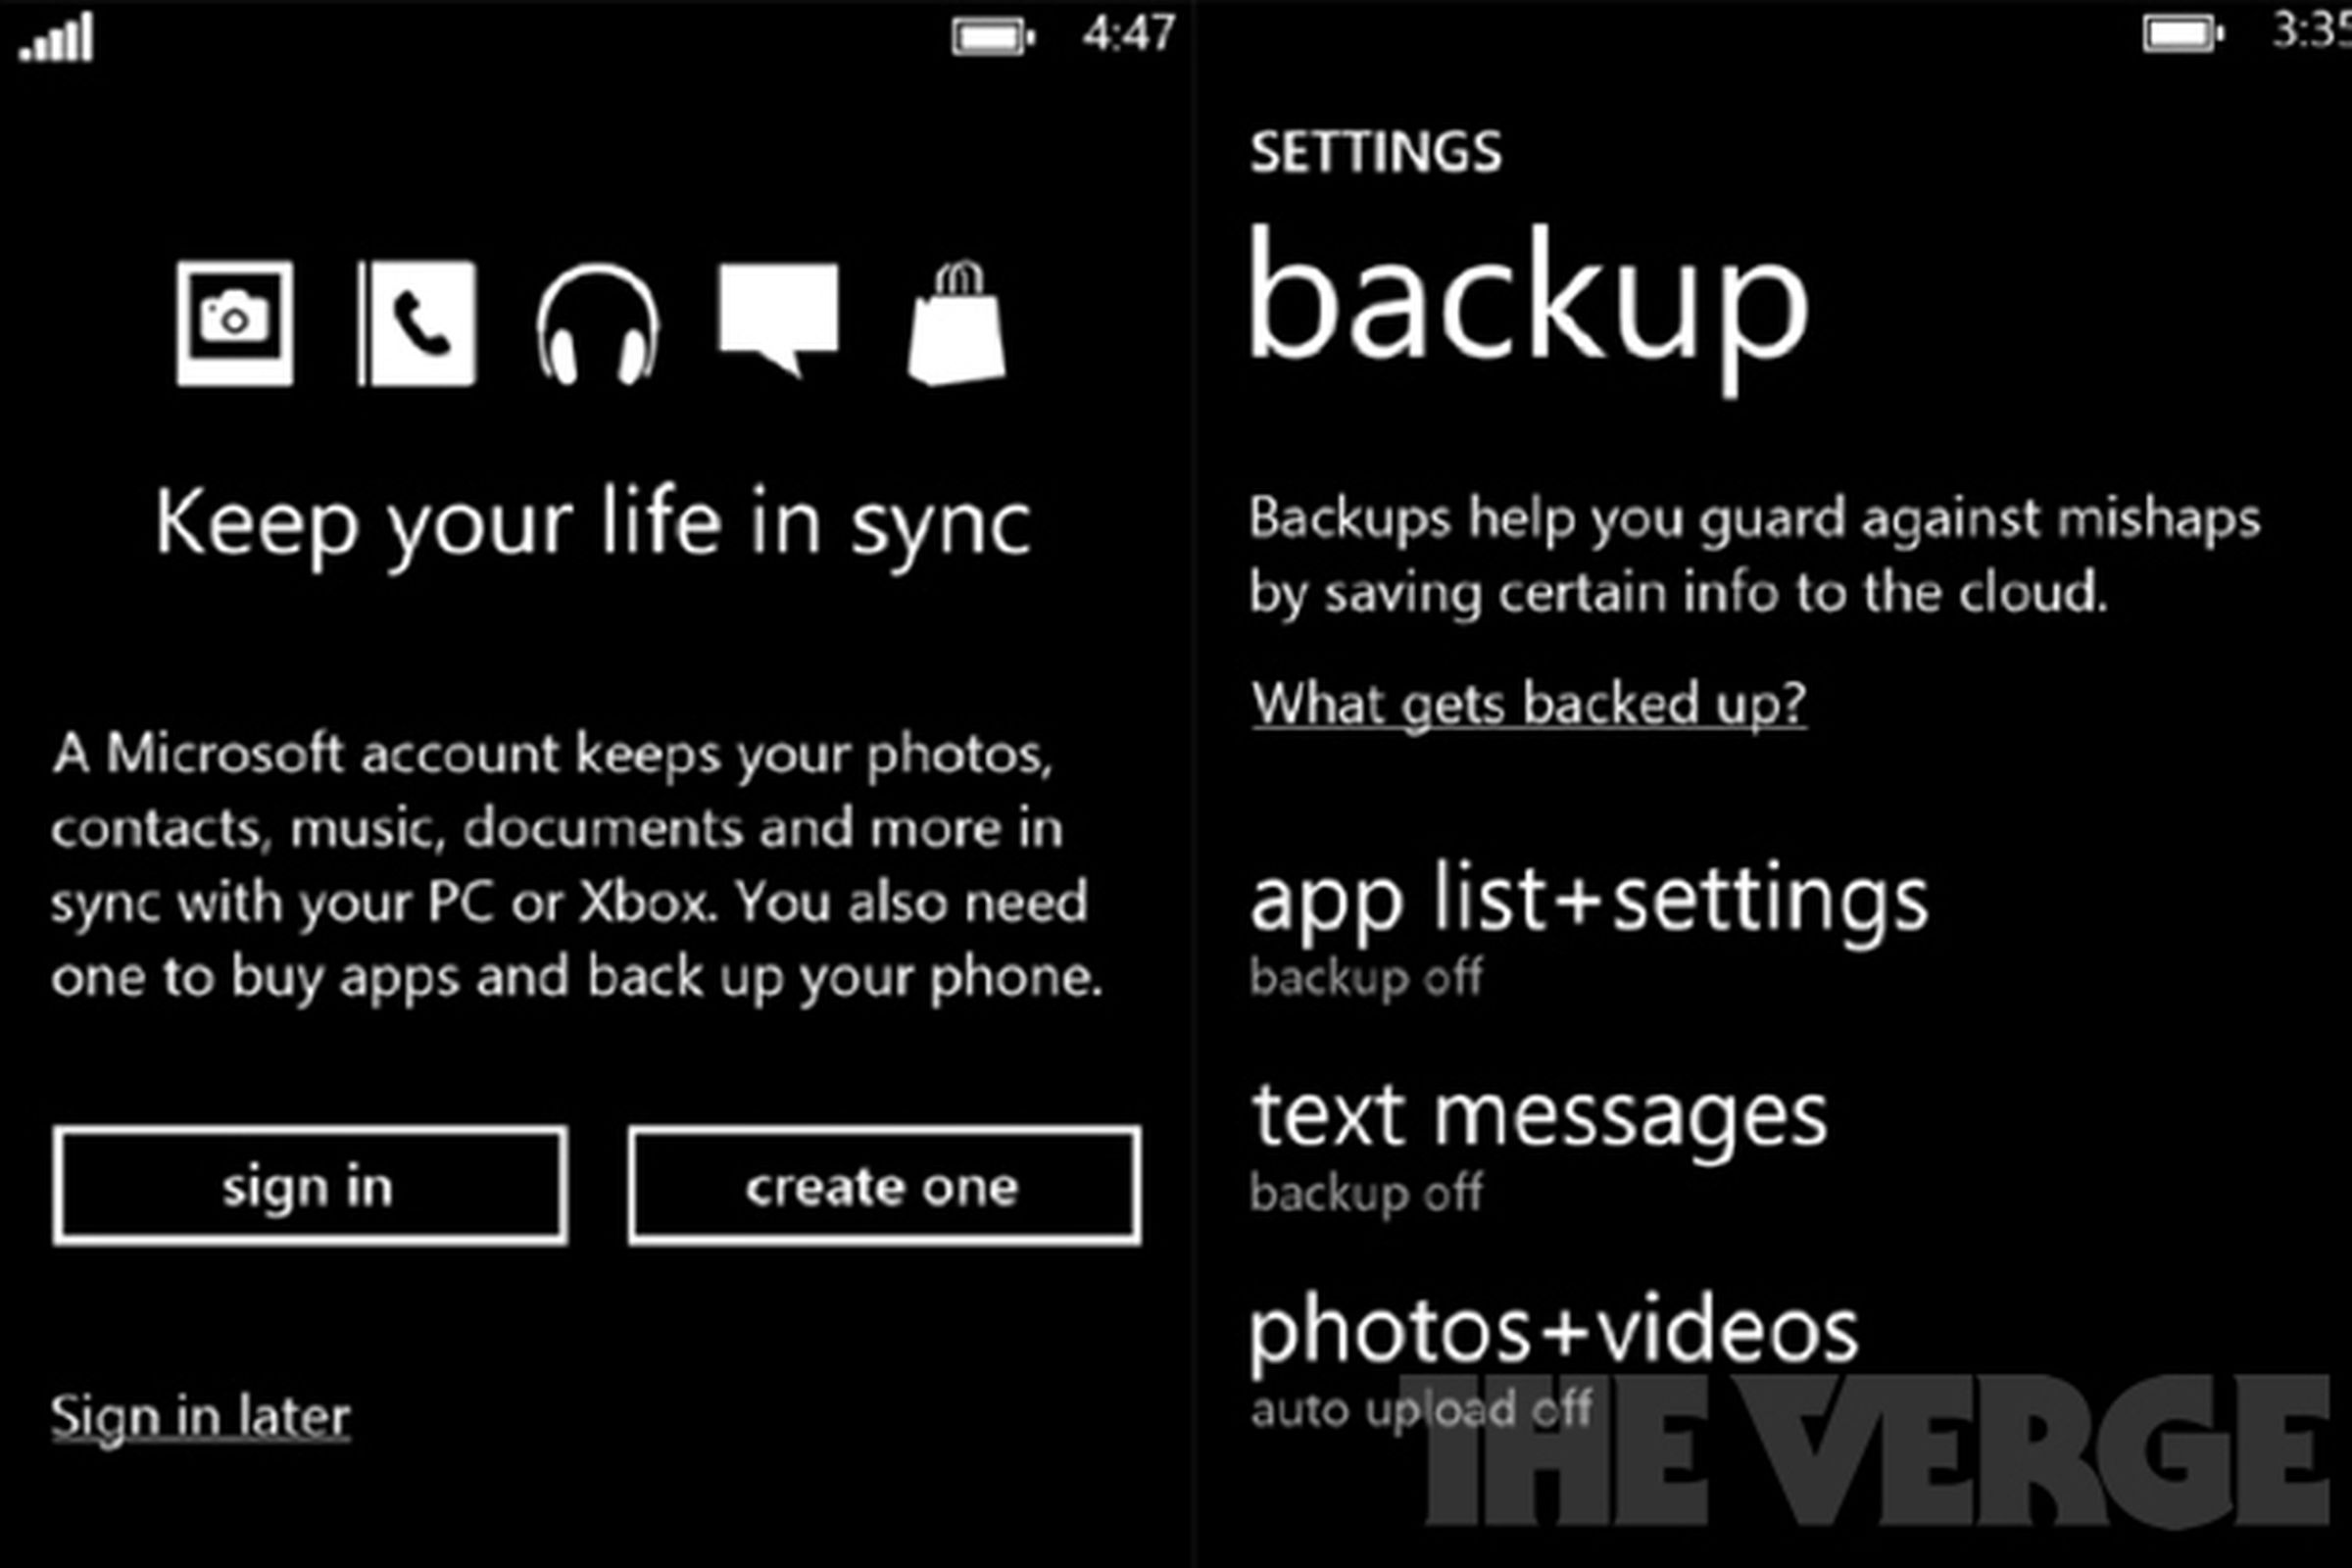 Windows Phone 8 backup